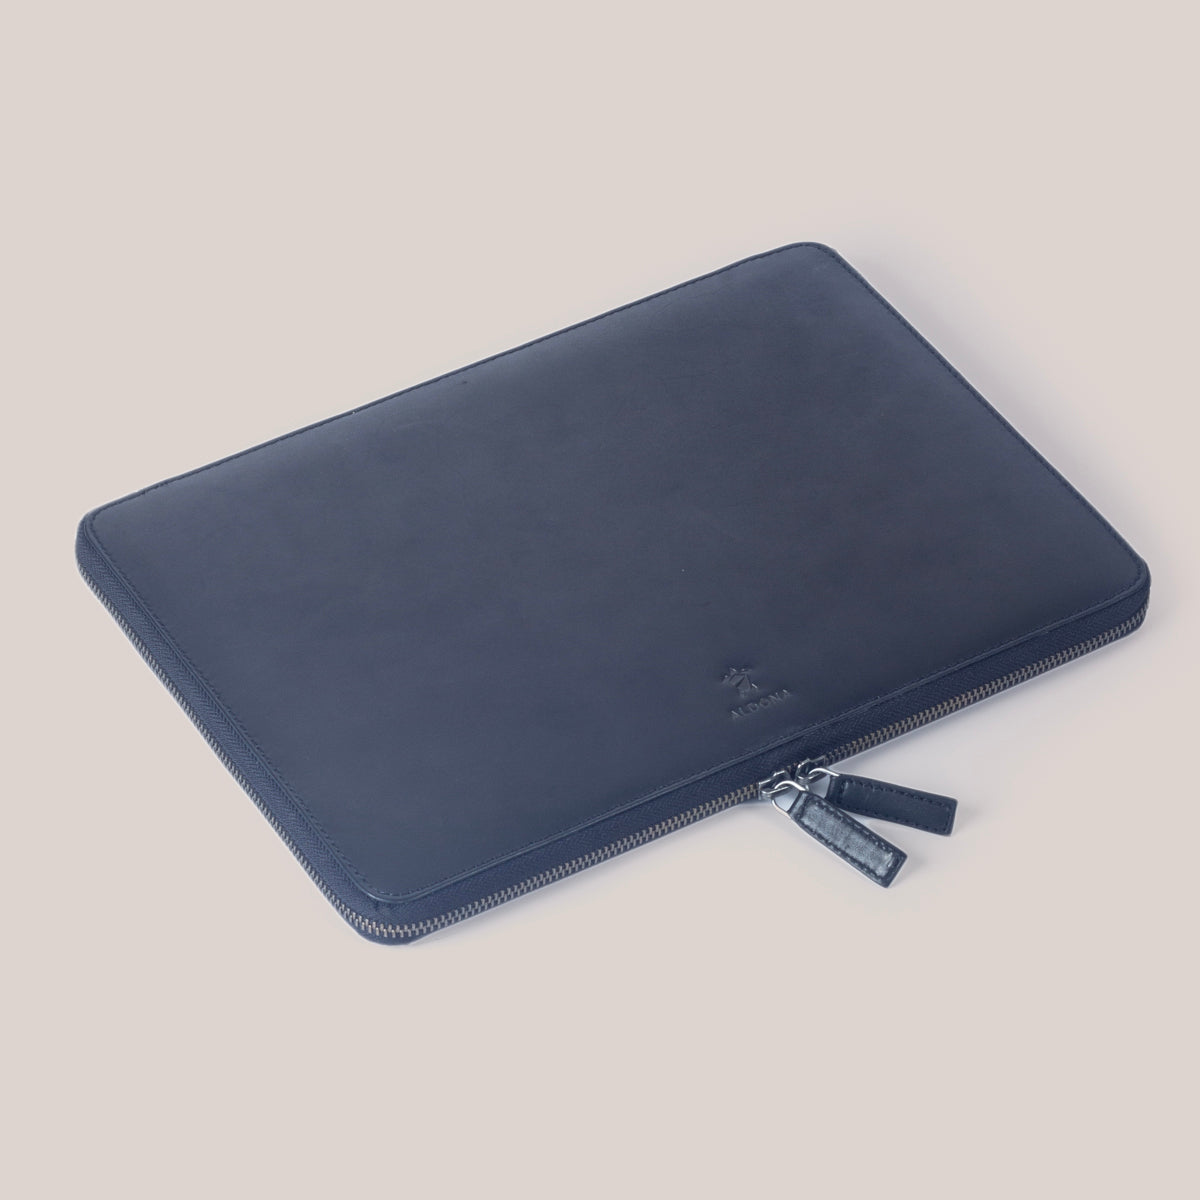 Microsoft Surface Zippered Laptop Case - Onyx Black